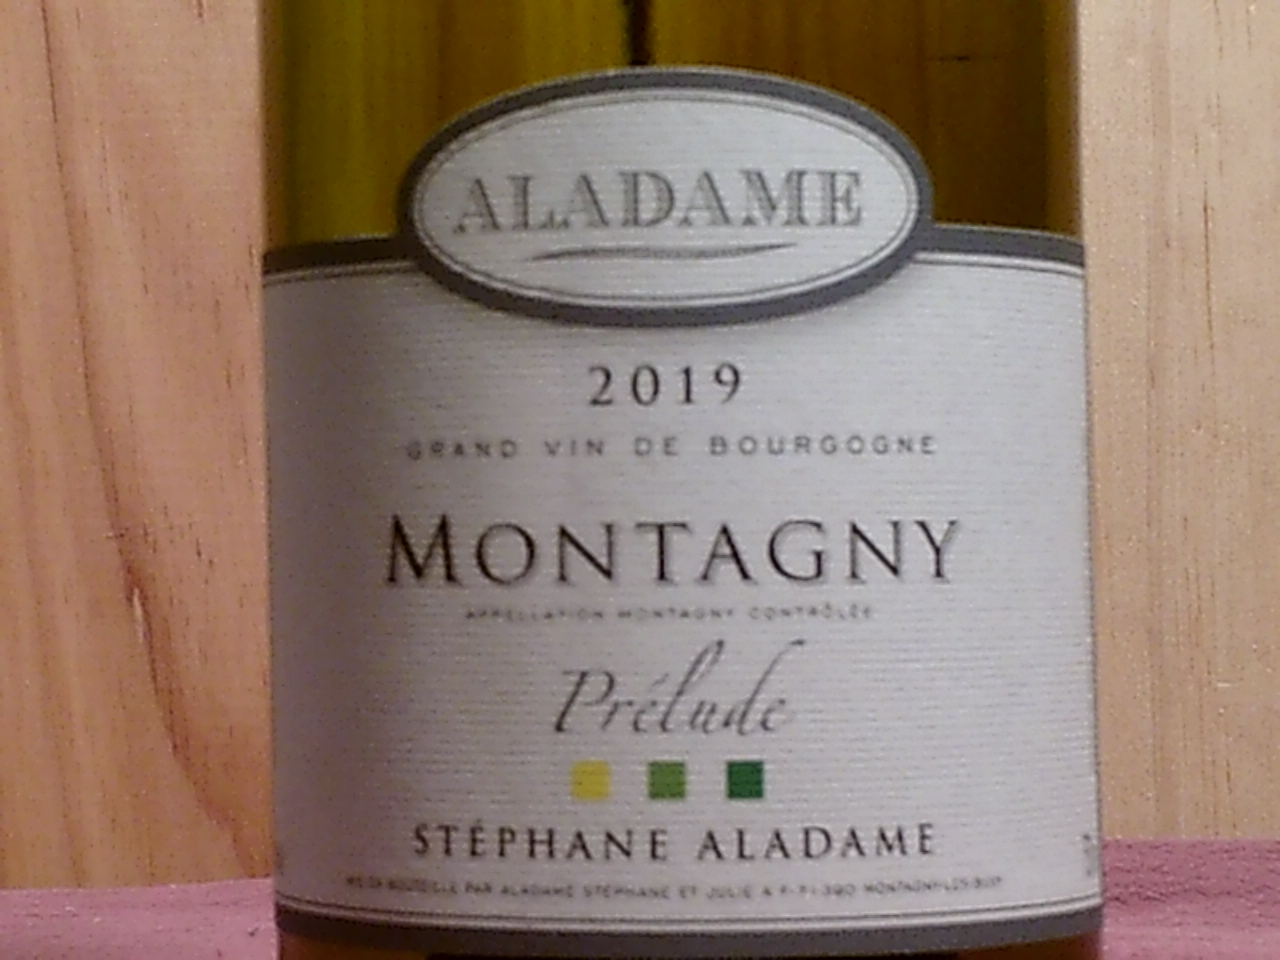 montagny-domaine-aladame-stephane-prelude-2019